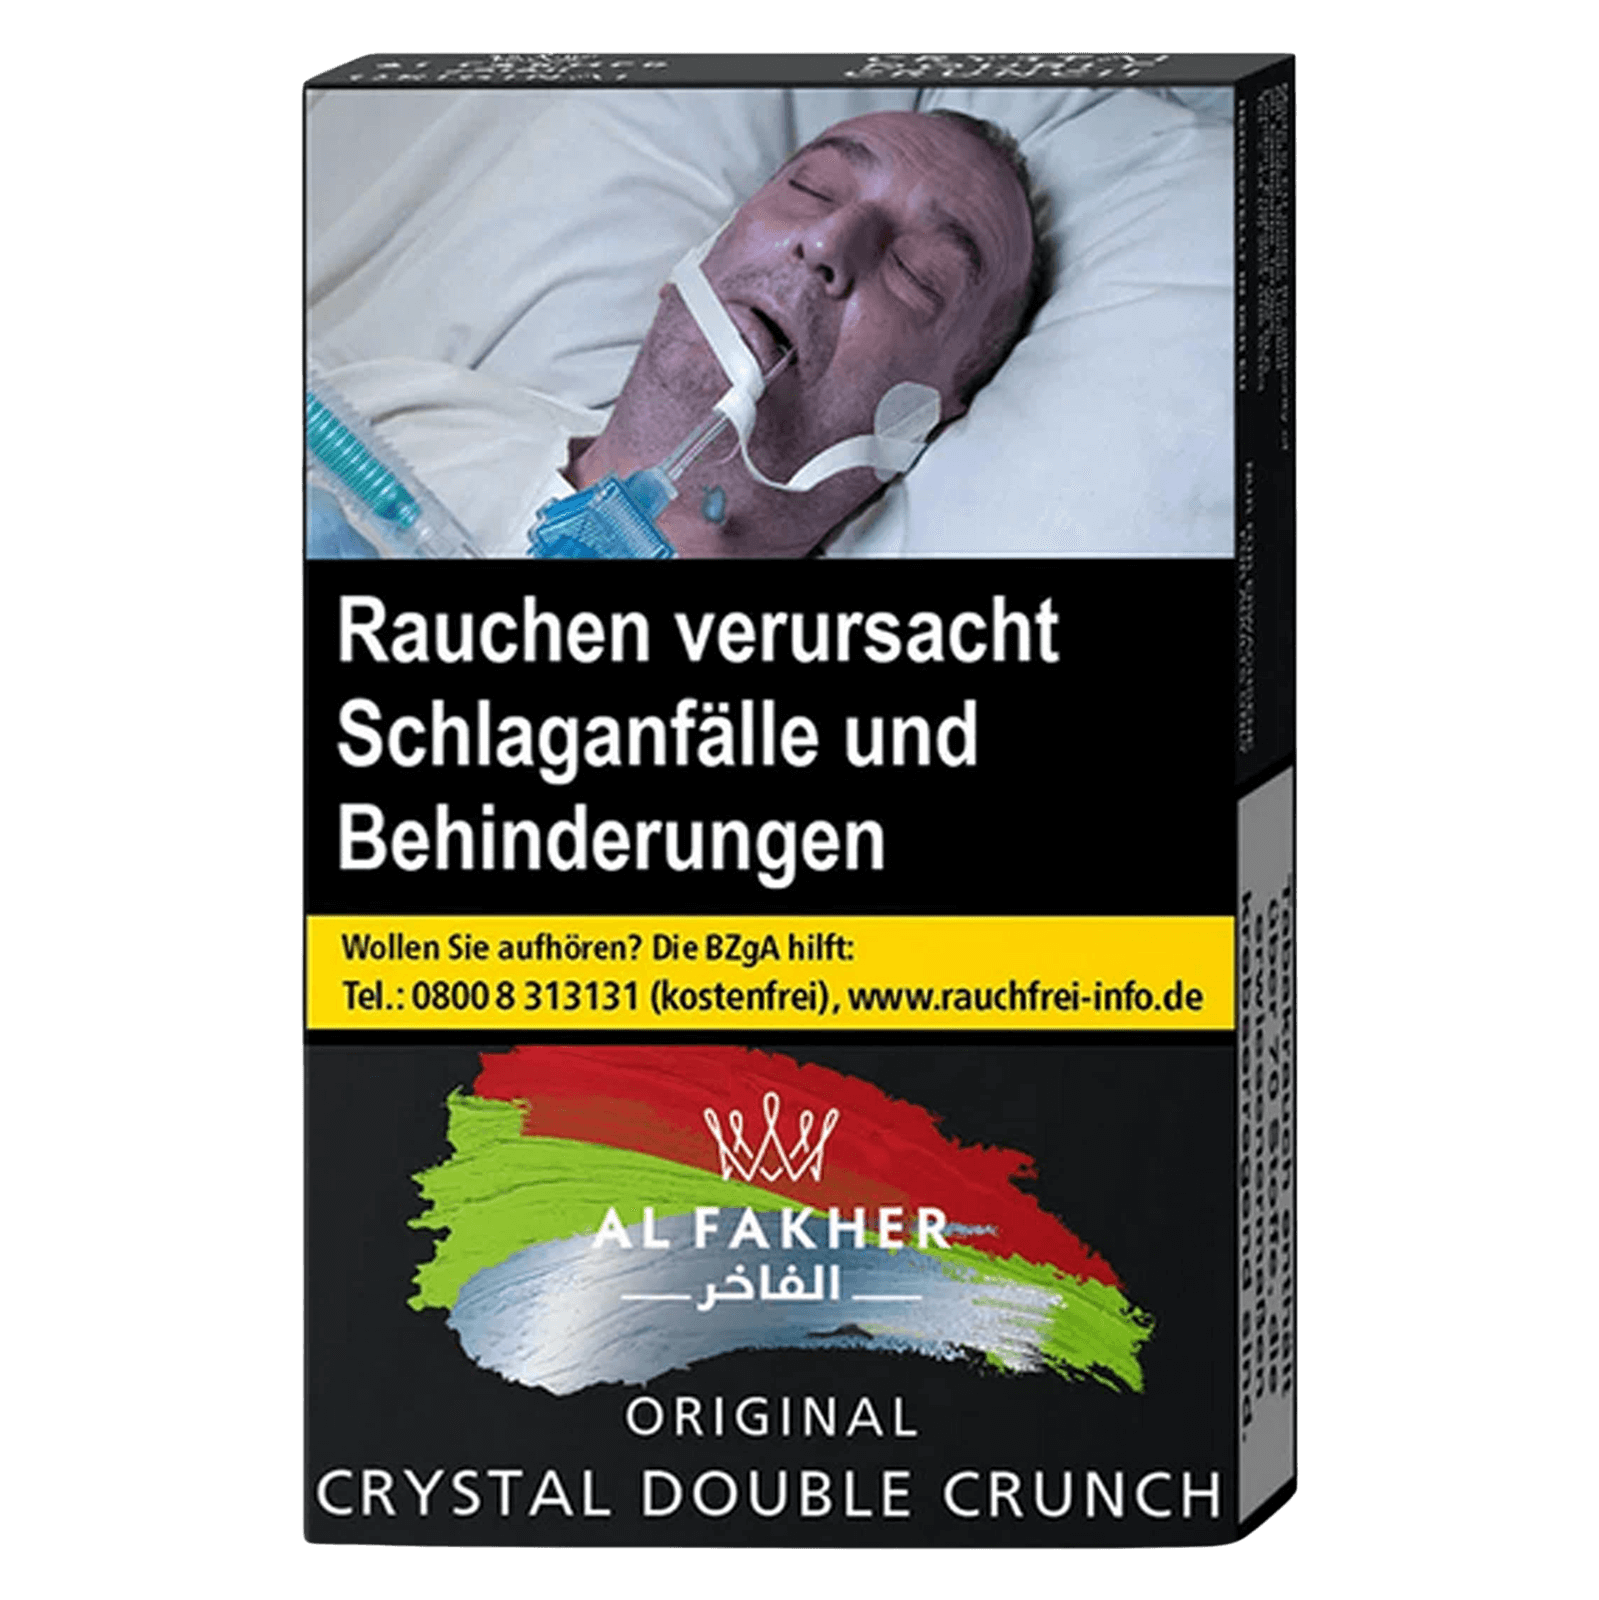 Al Fakher 25g - Crystal Double Crunch